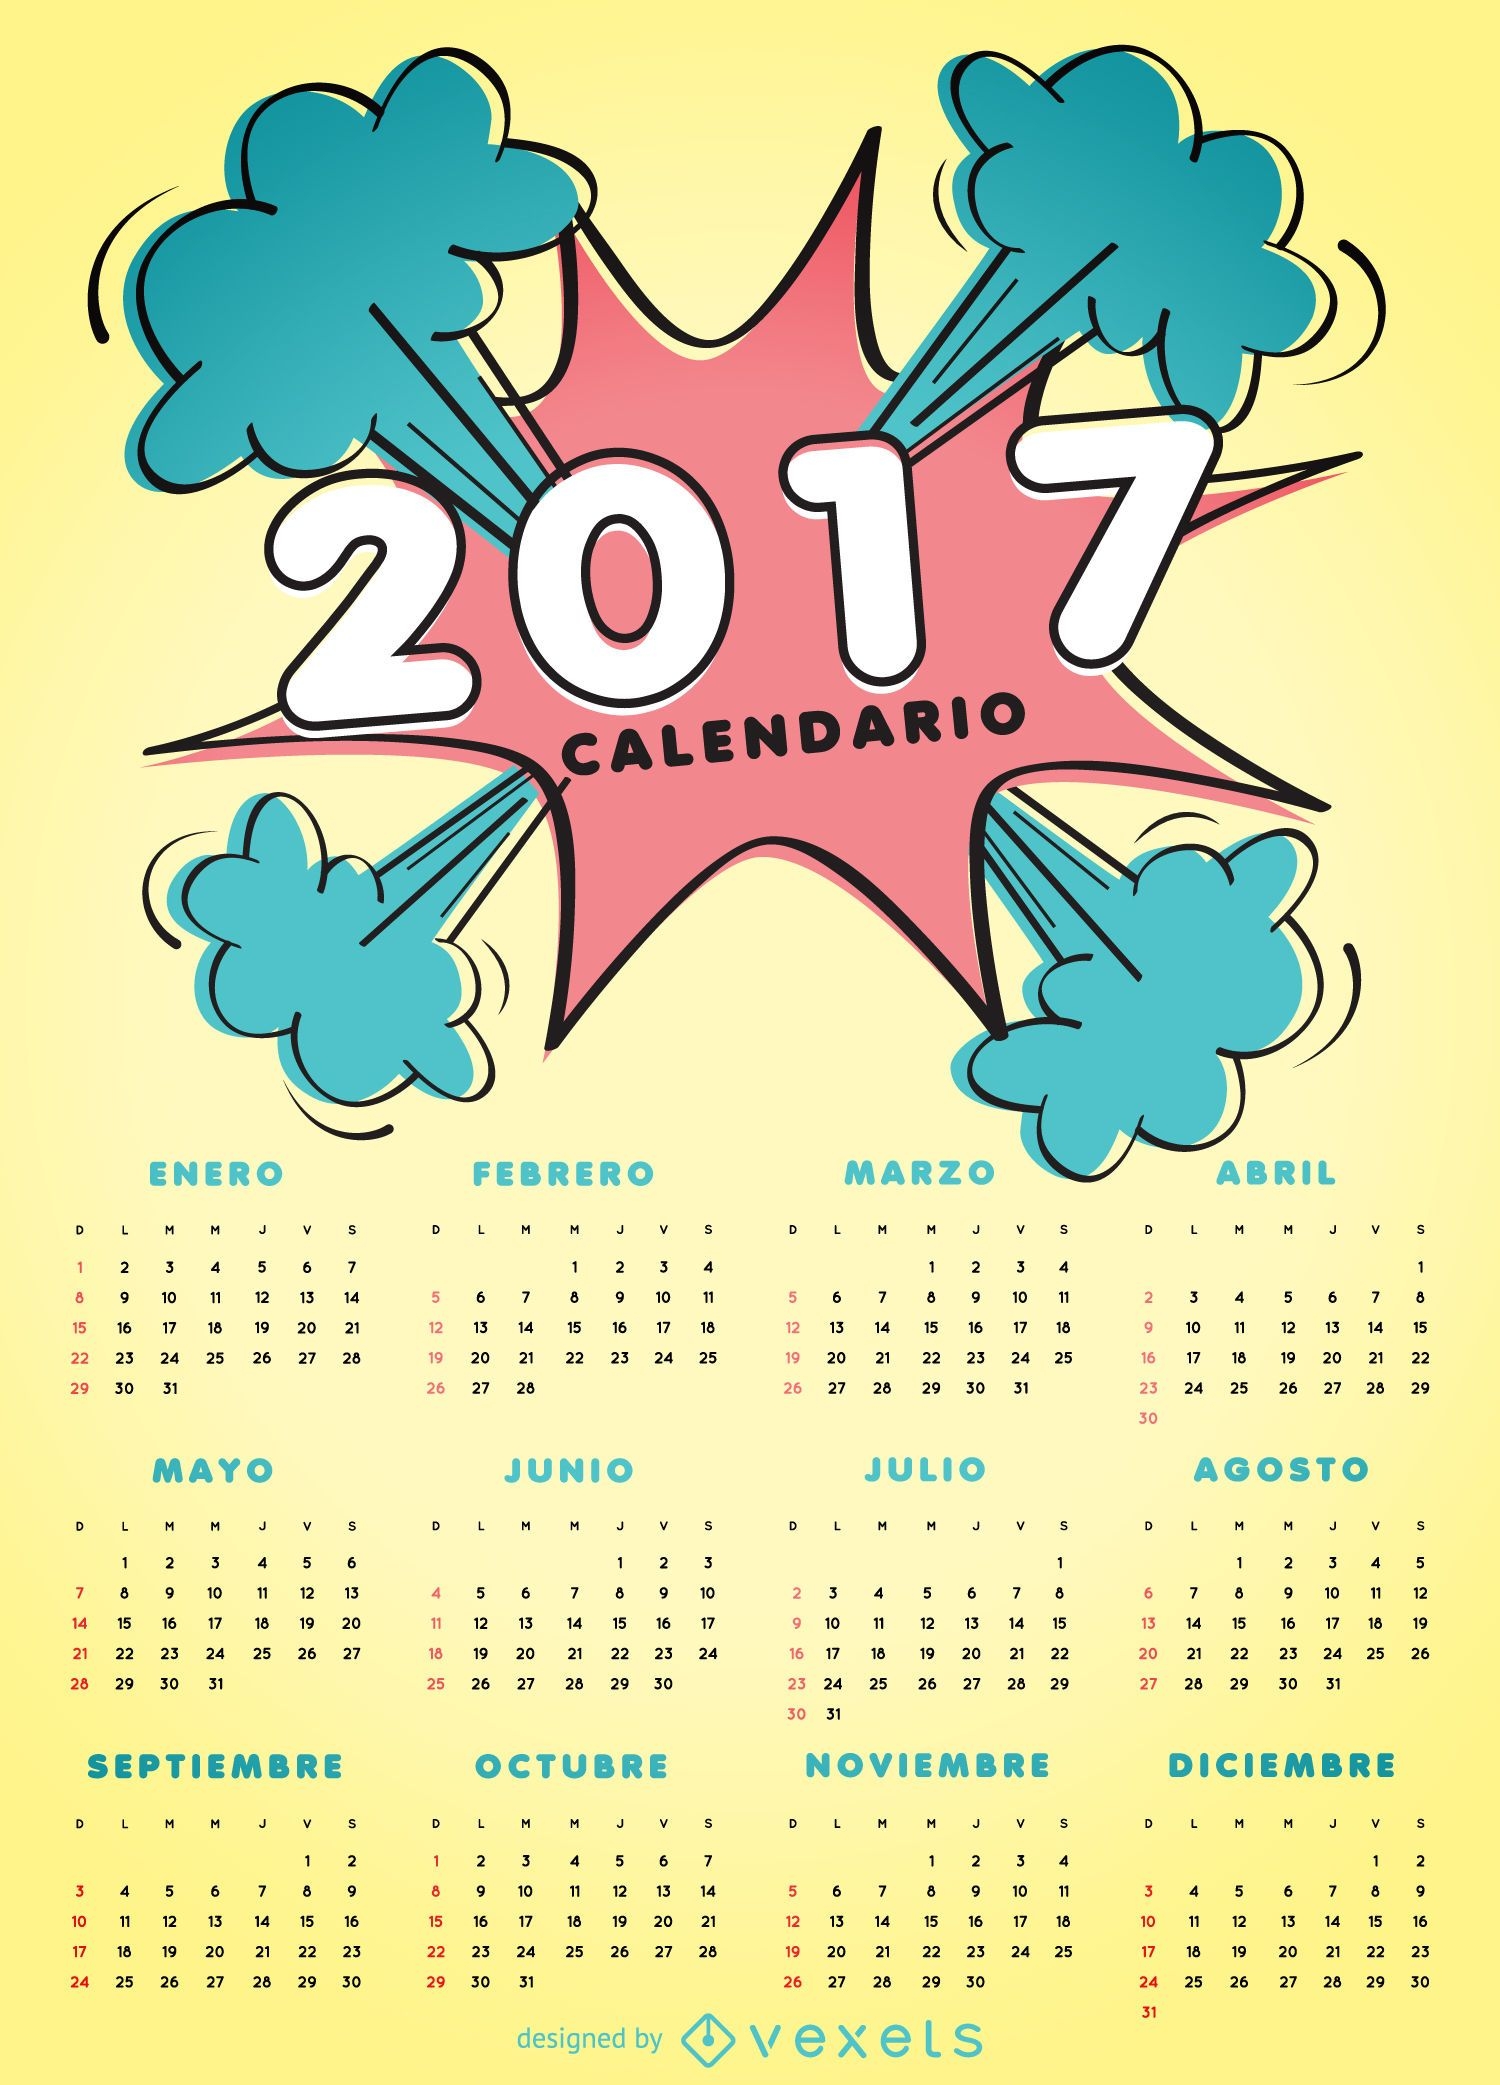 Calendario estilo comic 2017 en español